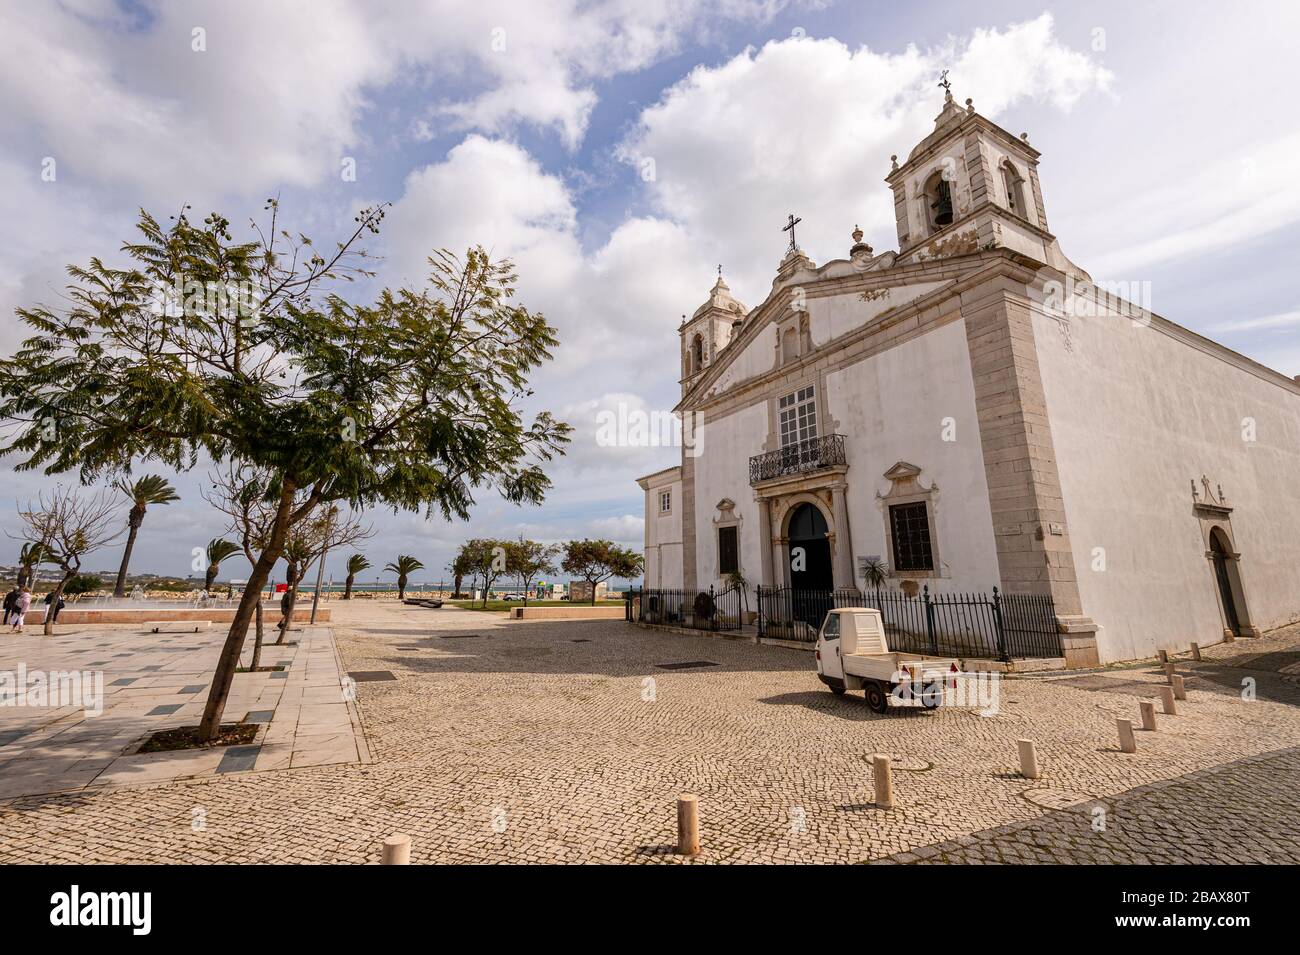 Lagos, Portugal - 5 March 2020: Santa Maria Church in Lagos, Portugal Stock Photo